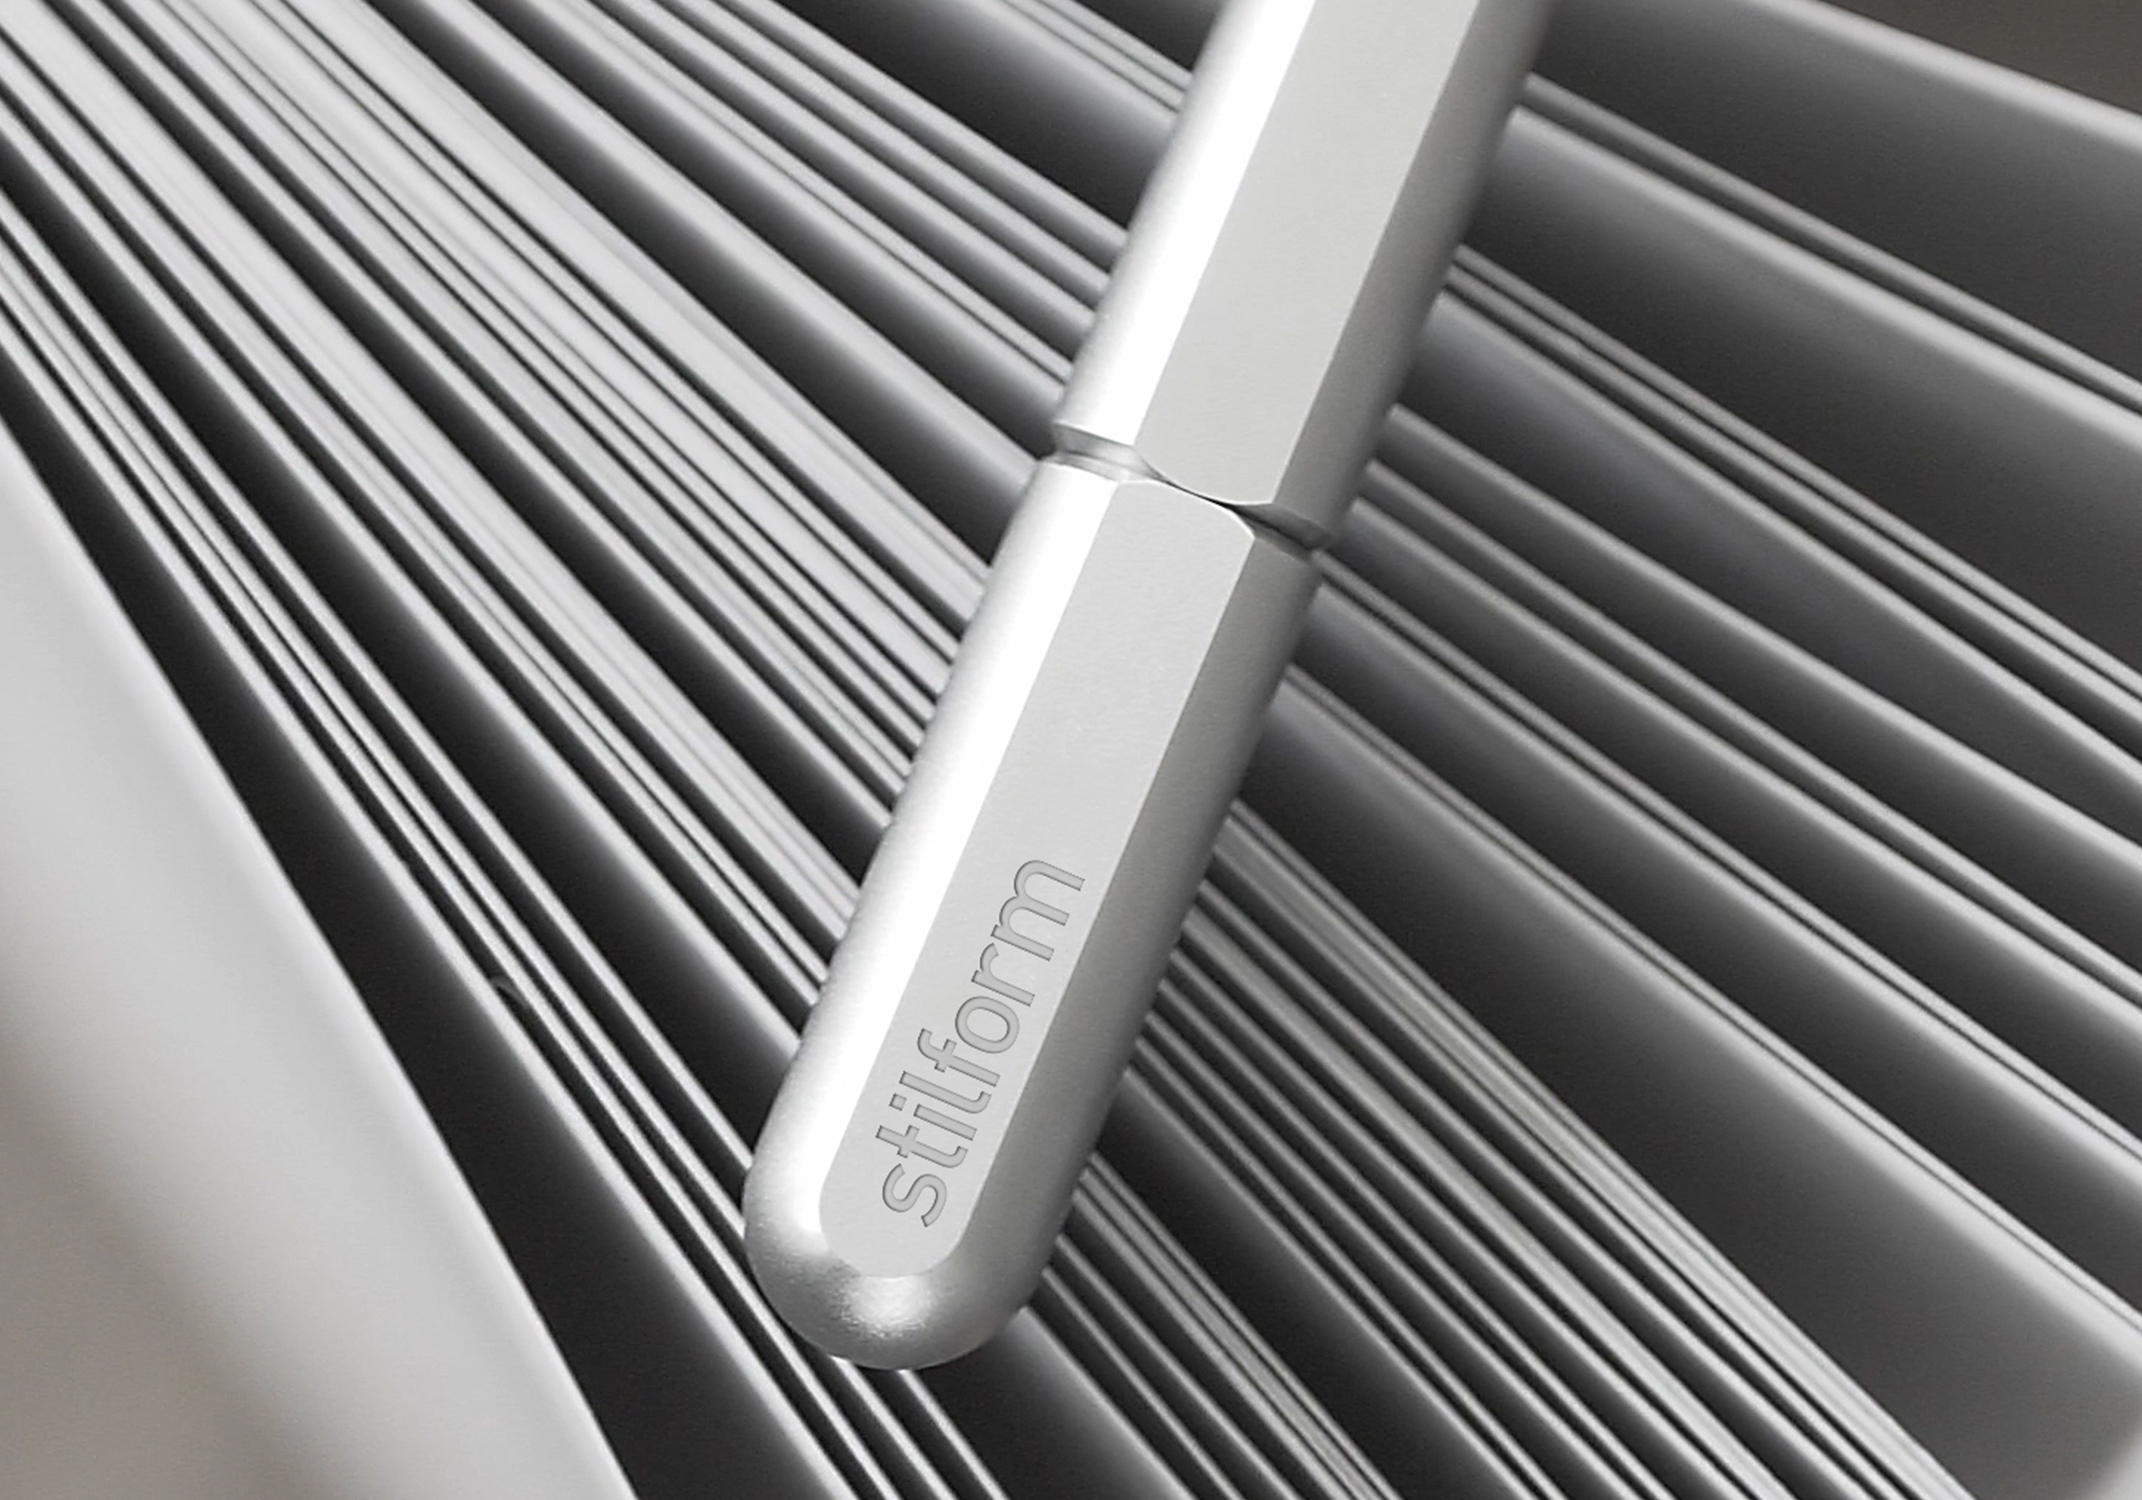 Award-winning studio stilform's magnetic Arc Pen is simple